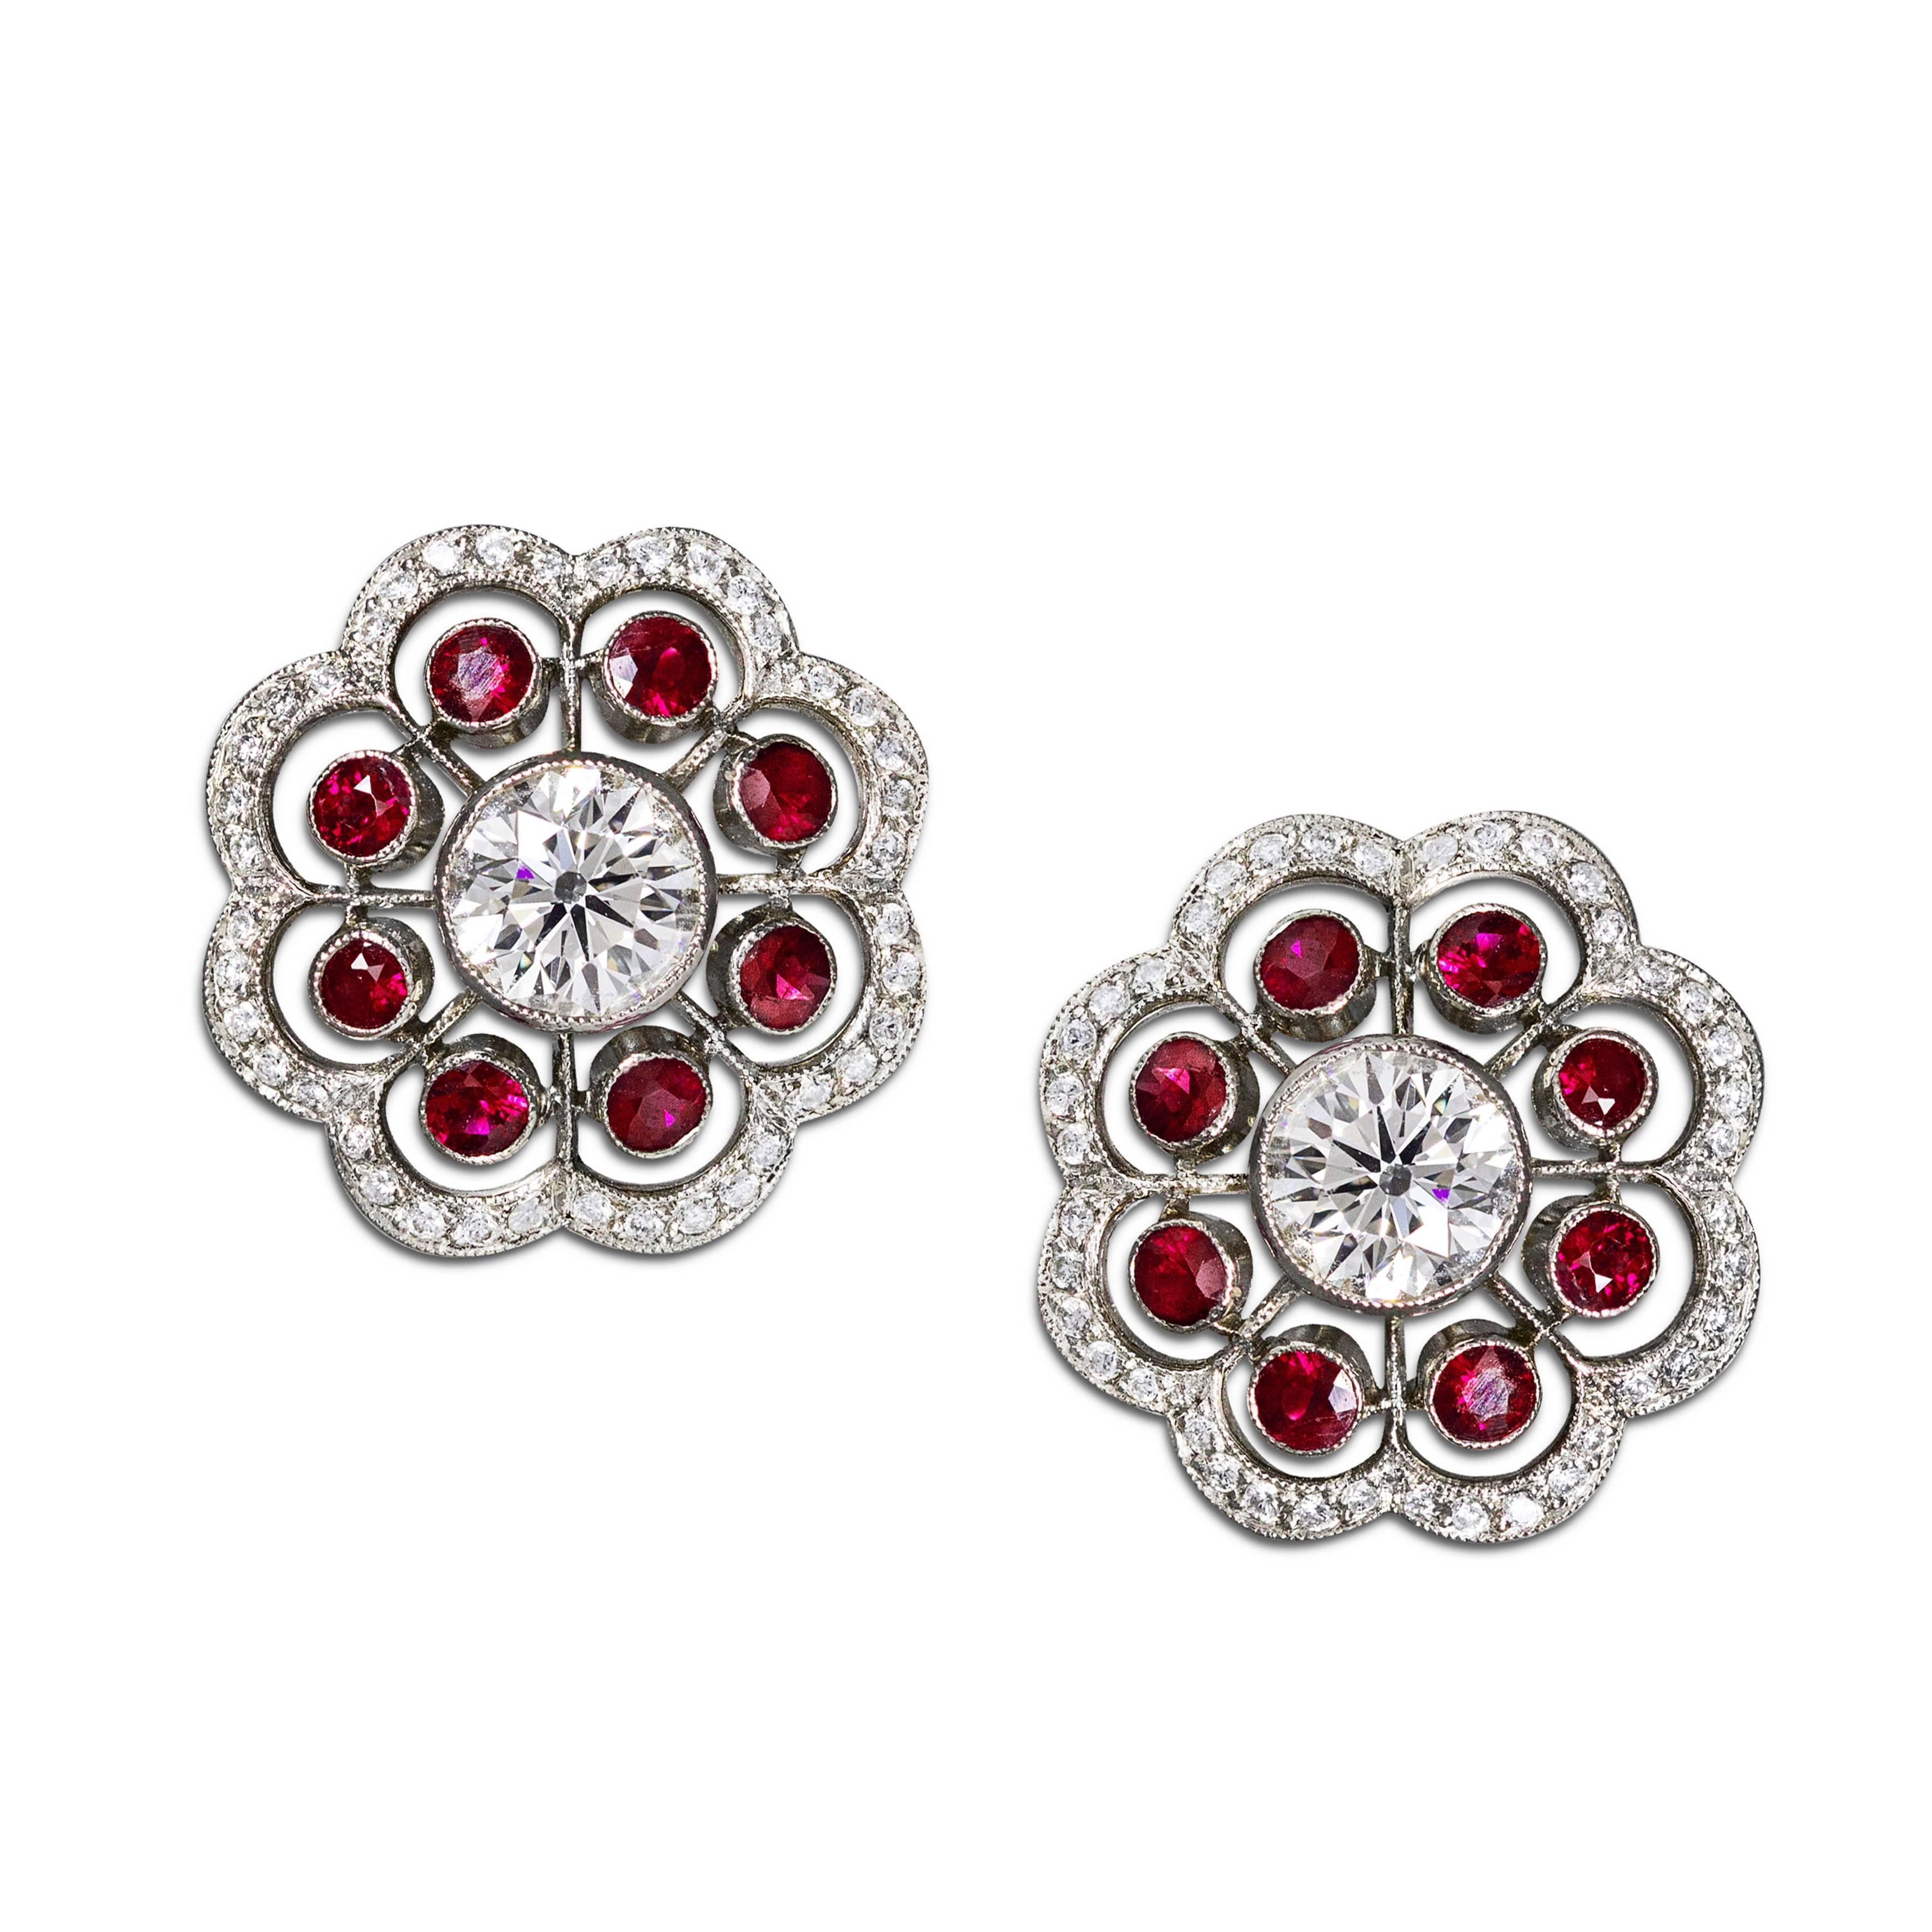 Roman Malakov 4.13 Carats Total Ruby and Diamonds Floral Motif Stub Earrings